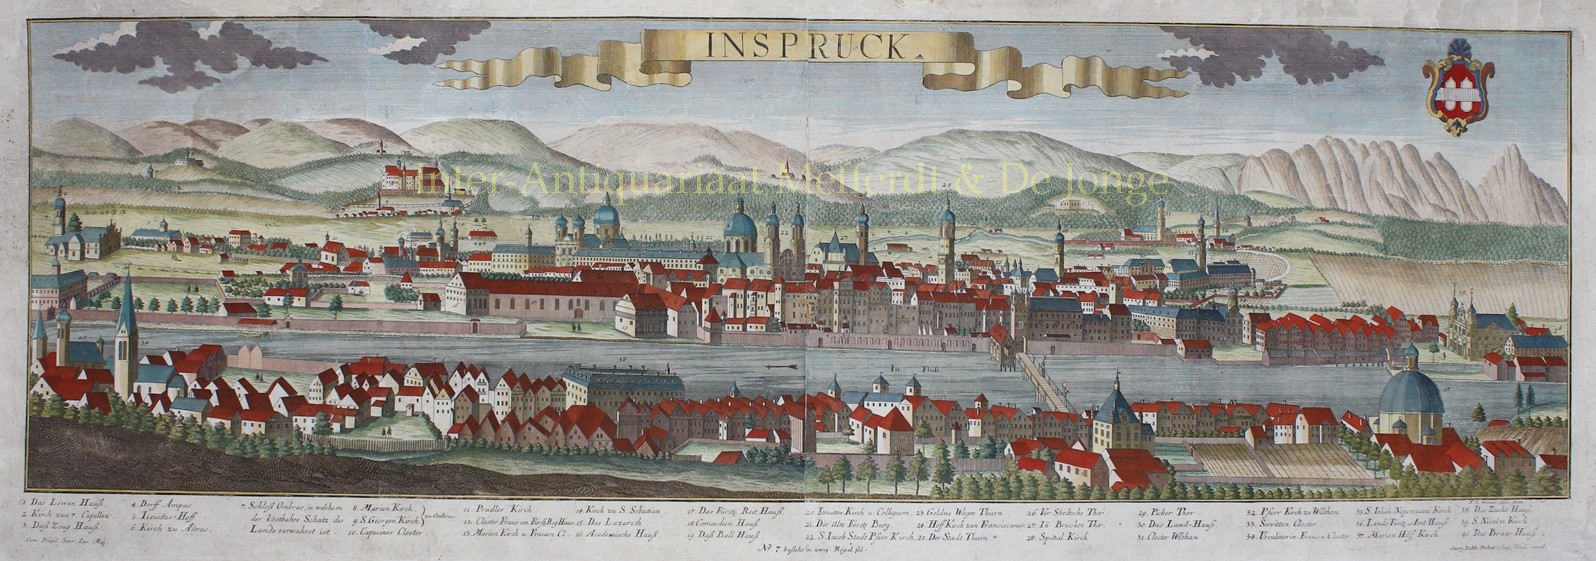  - Innsbruck - Johann Friedrich Probst after Friedrich Bernhard Werner, c. 1740